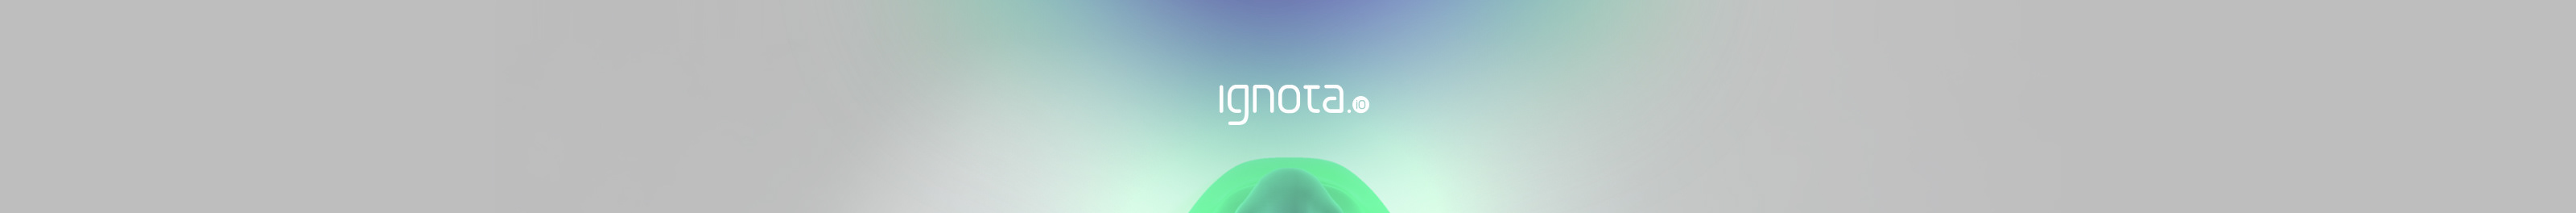 ignota. io's profile banner